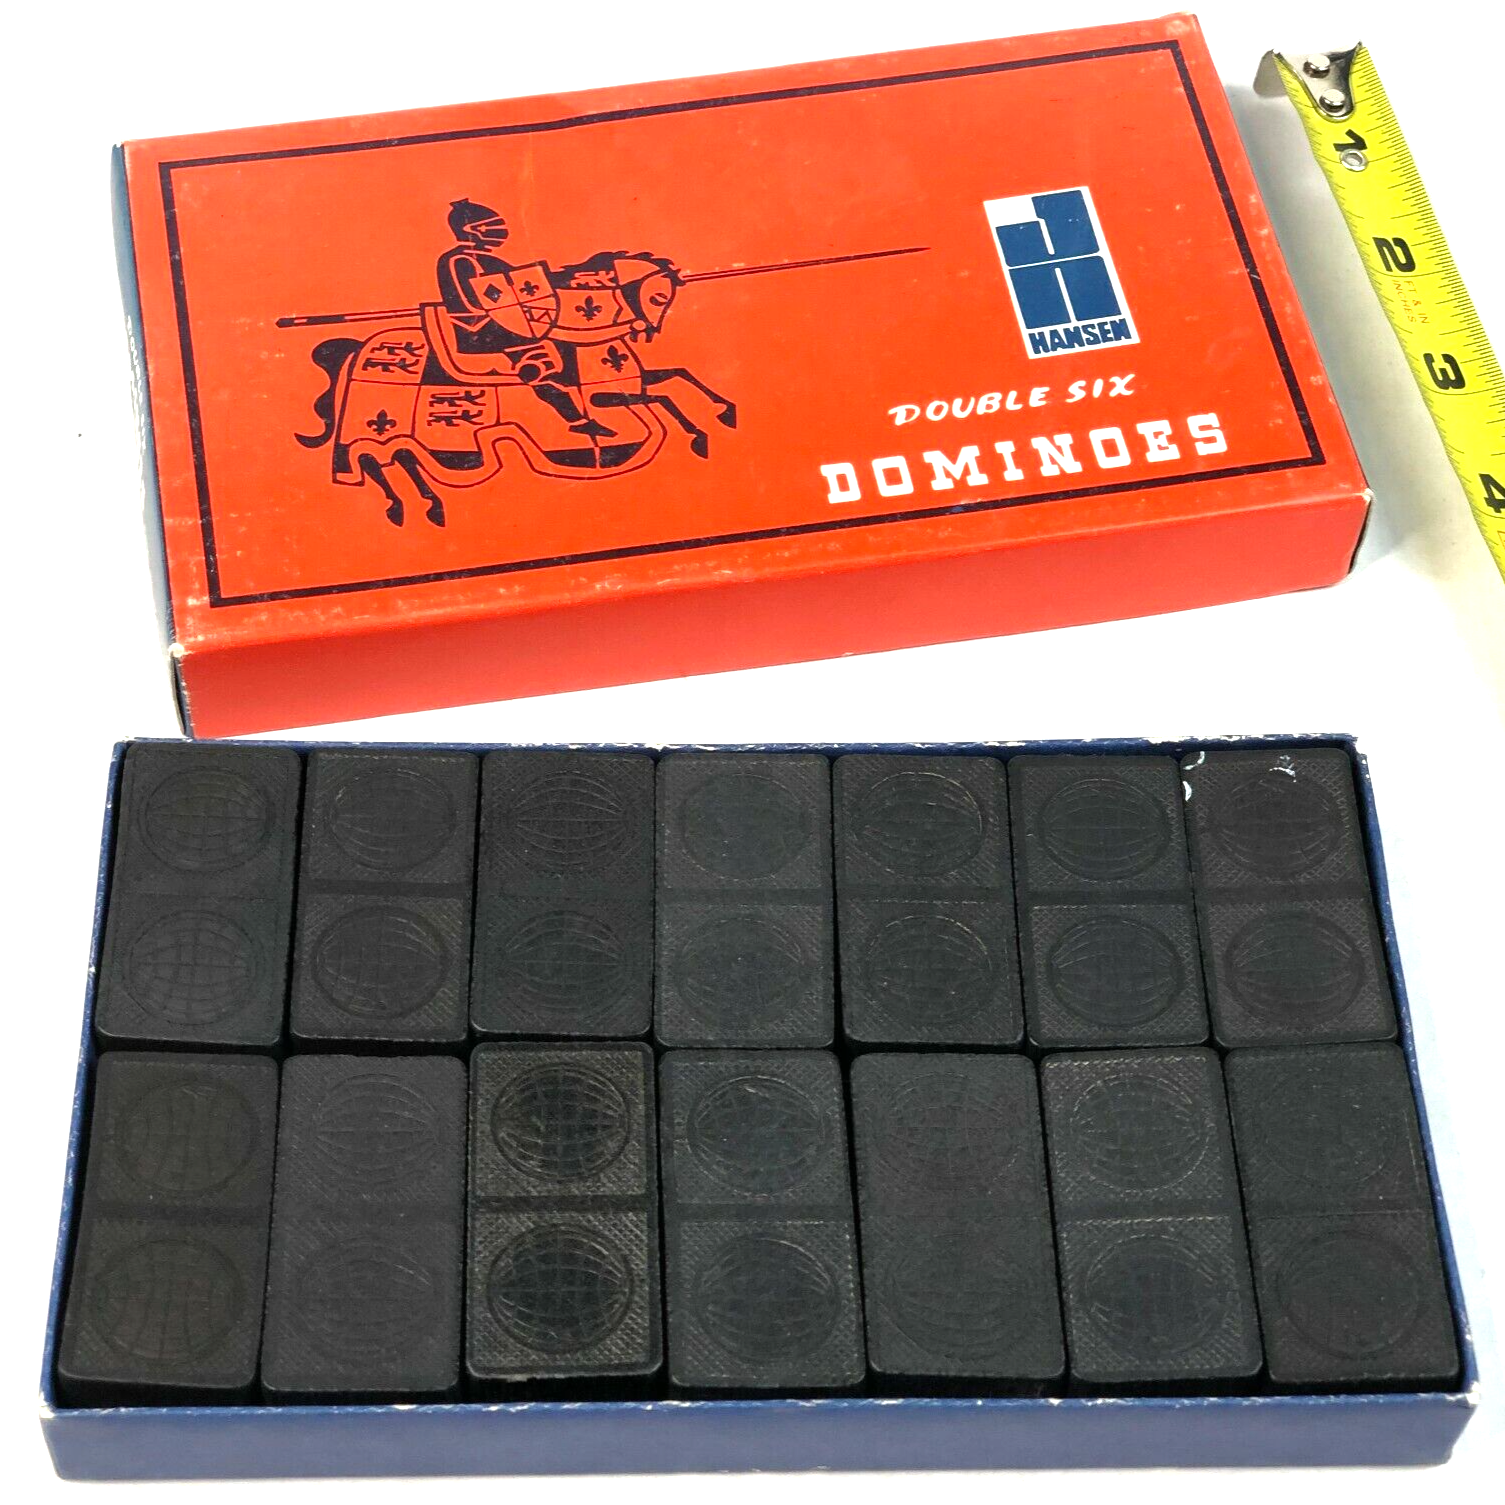 Hansen Double Six Vintage Dominoes No. T7515 Hong Kong Joust Box 28 Tiles 1970s - $26.93